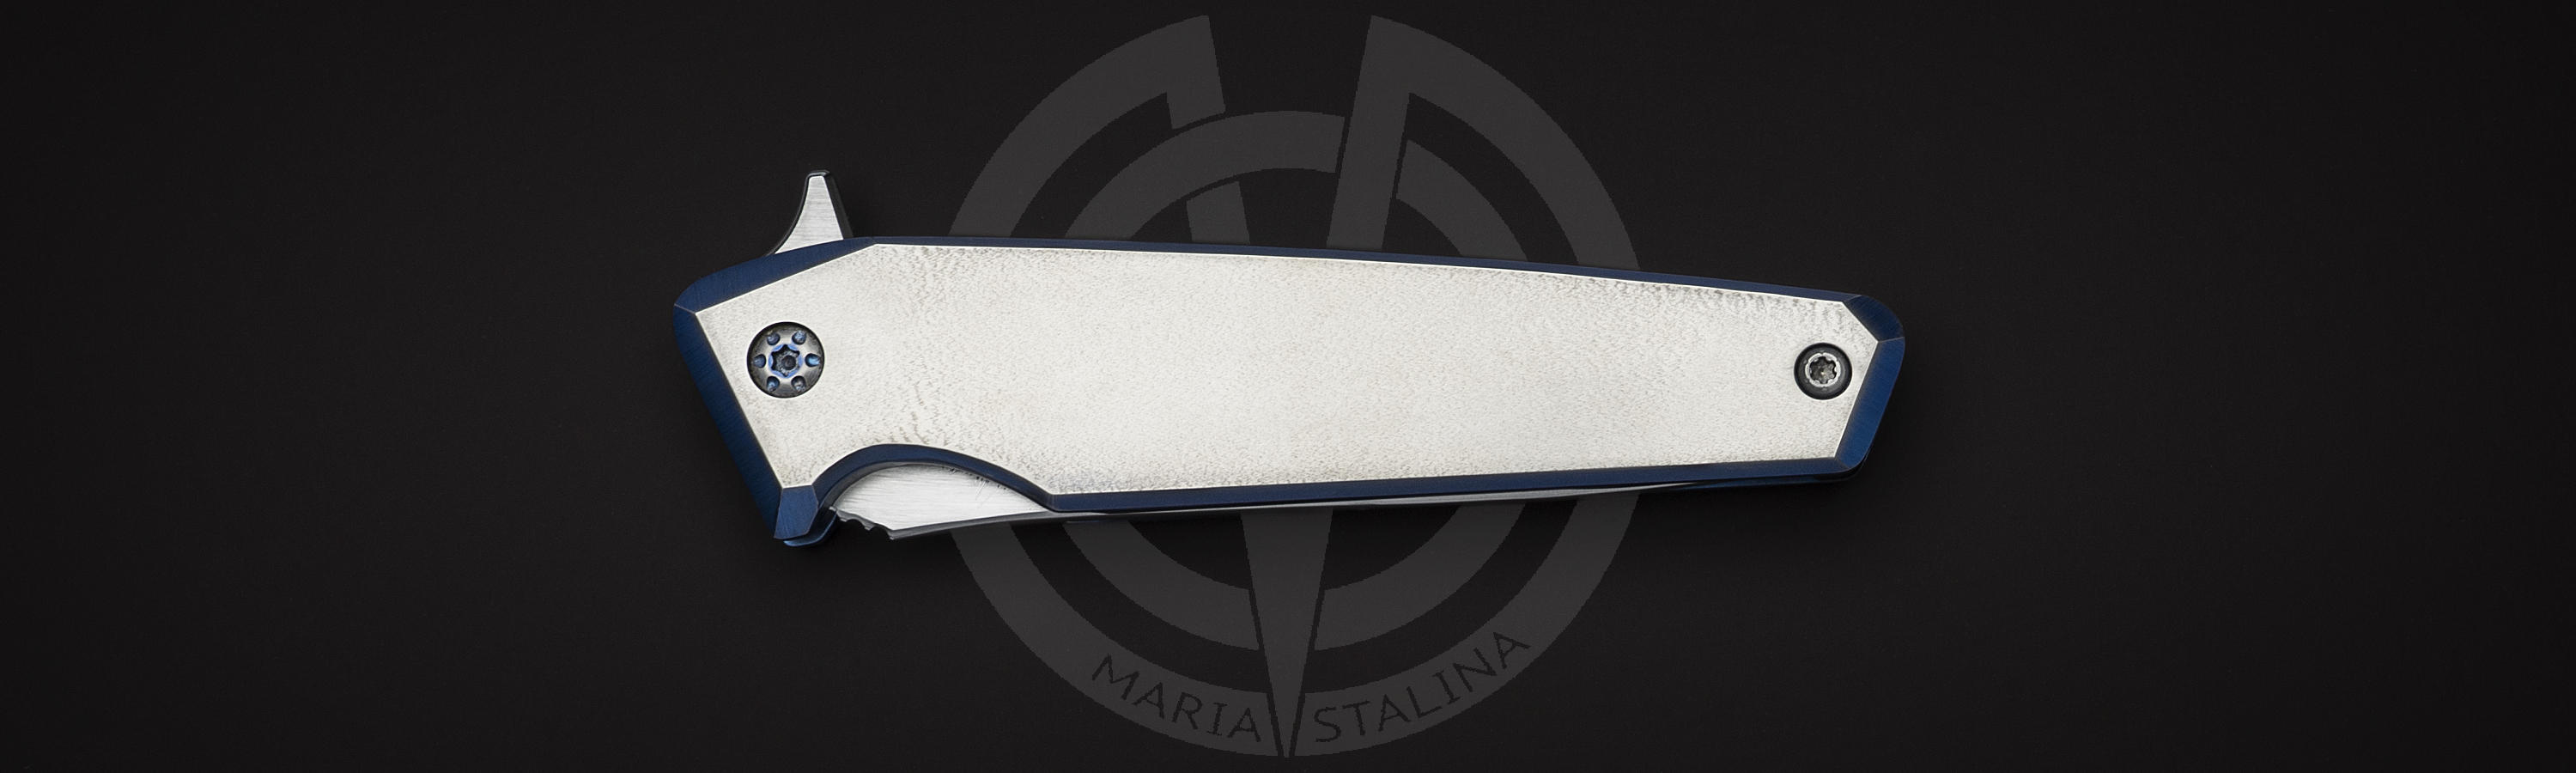 Титан 6Al4V — материал рукояти ножа Mark 8